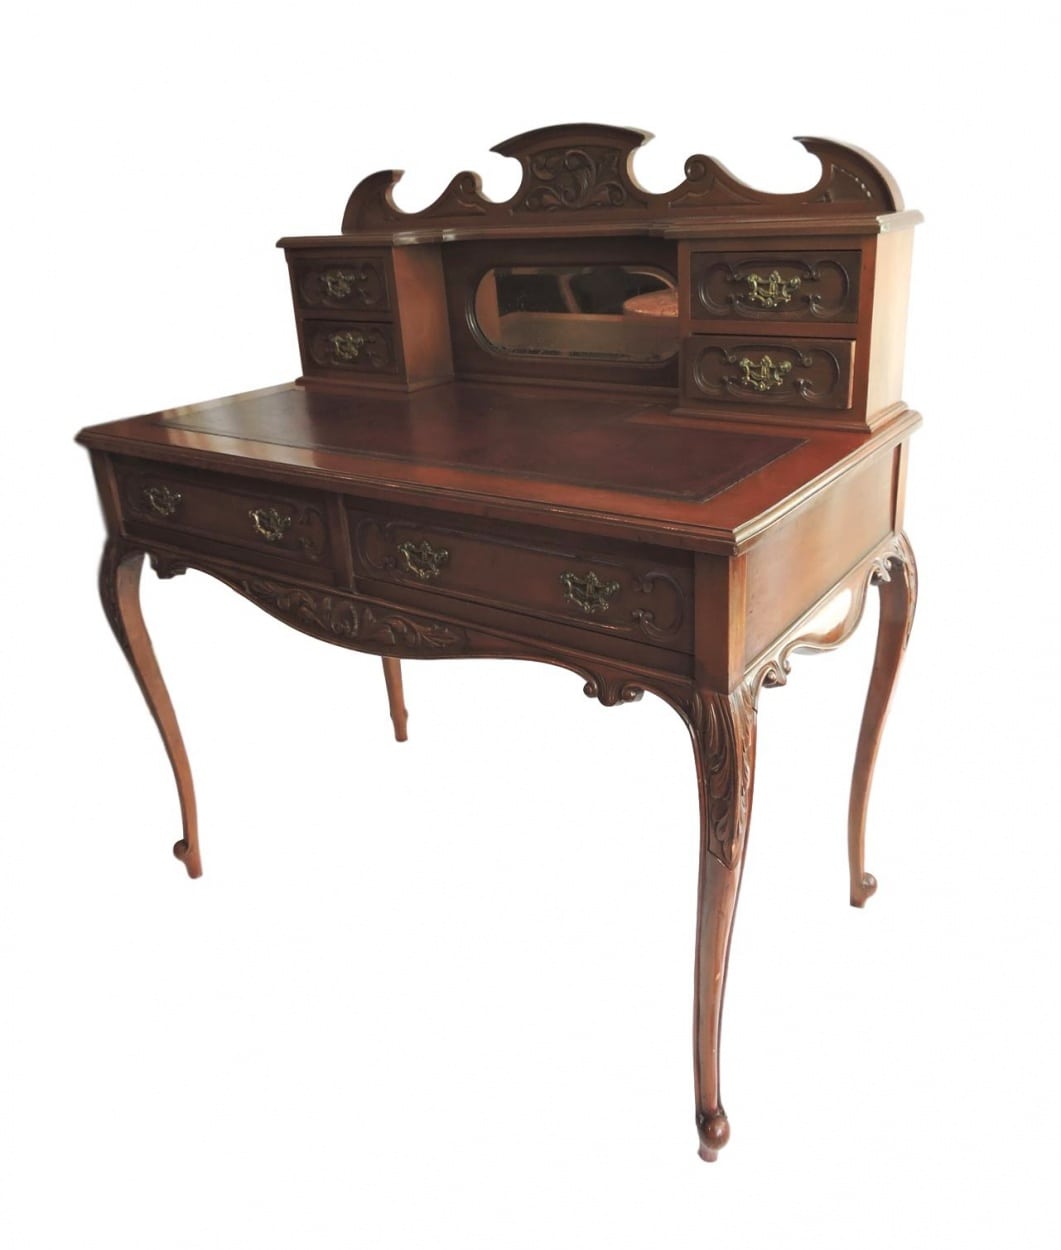 A European Art Nouveau Style Small Mahogany Leather Top Desk